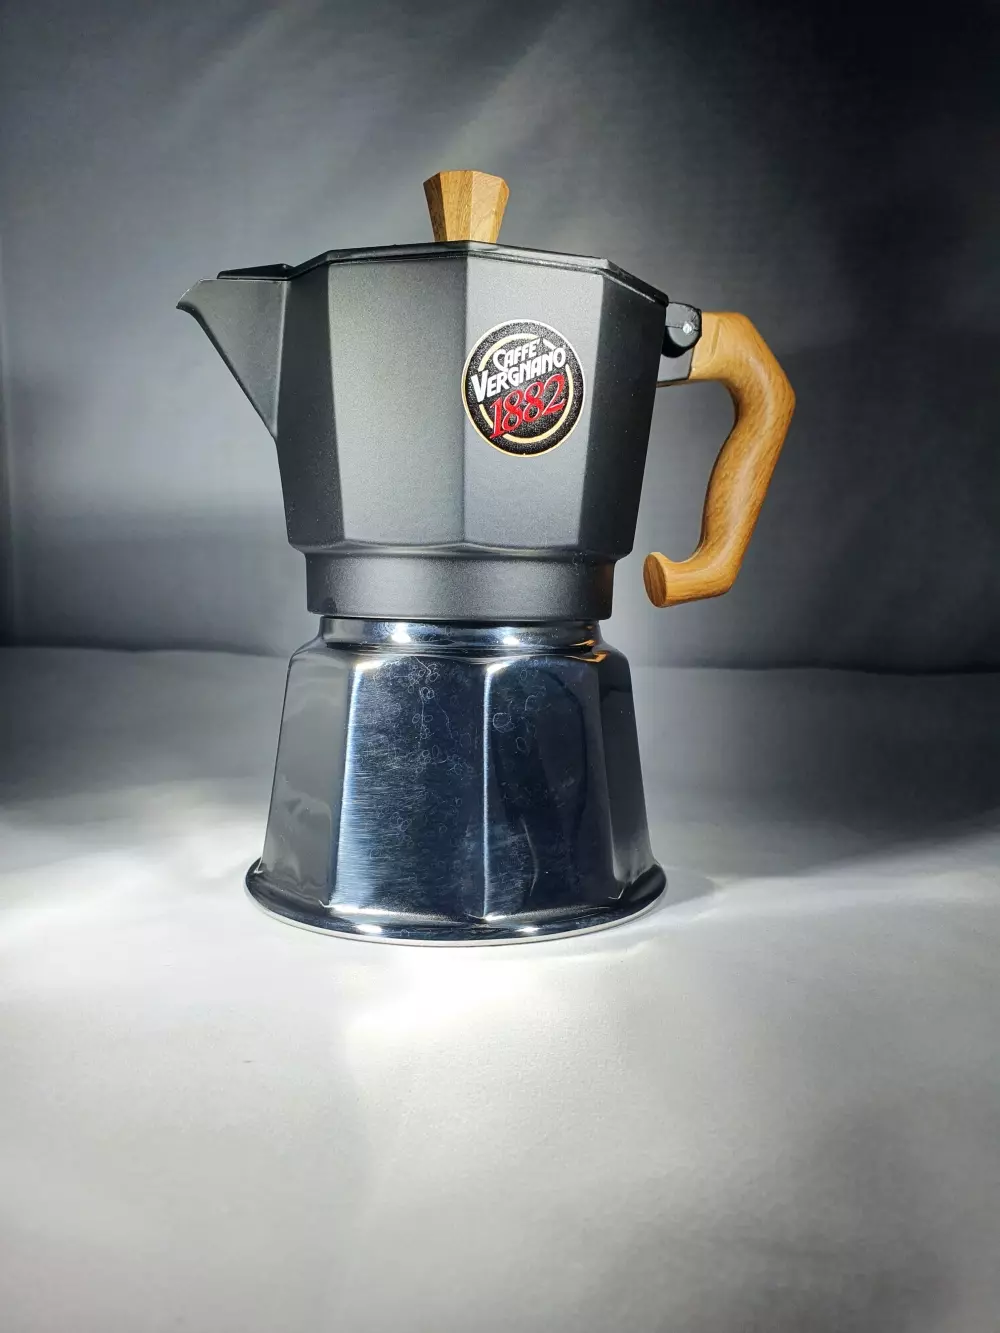 Moka Induction Black per Espresso 3 pers. - Vergnano, 80751164, Kaffe og Te, utstyr, Caffè Vergnano 1882, 99092NI, Espressobrygger som kan brukes på induksjonsplate!